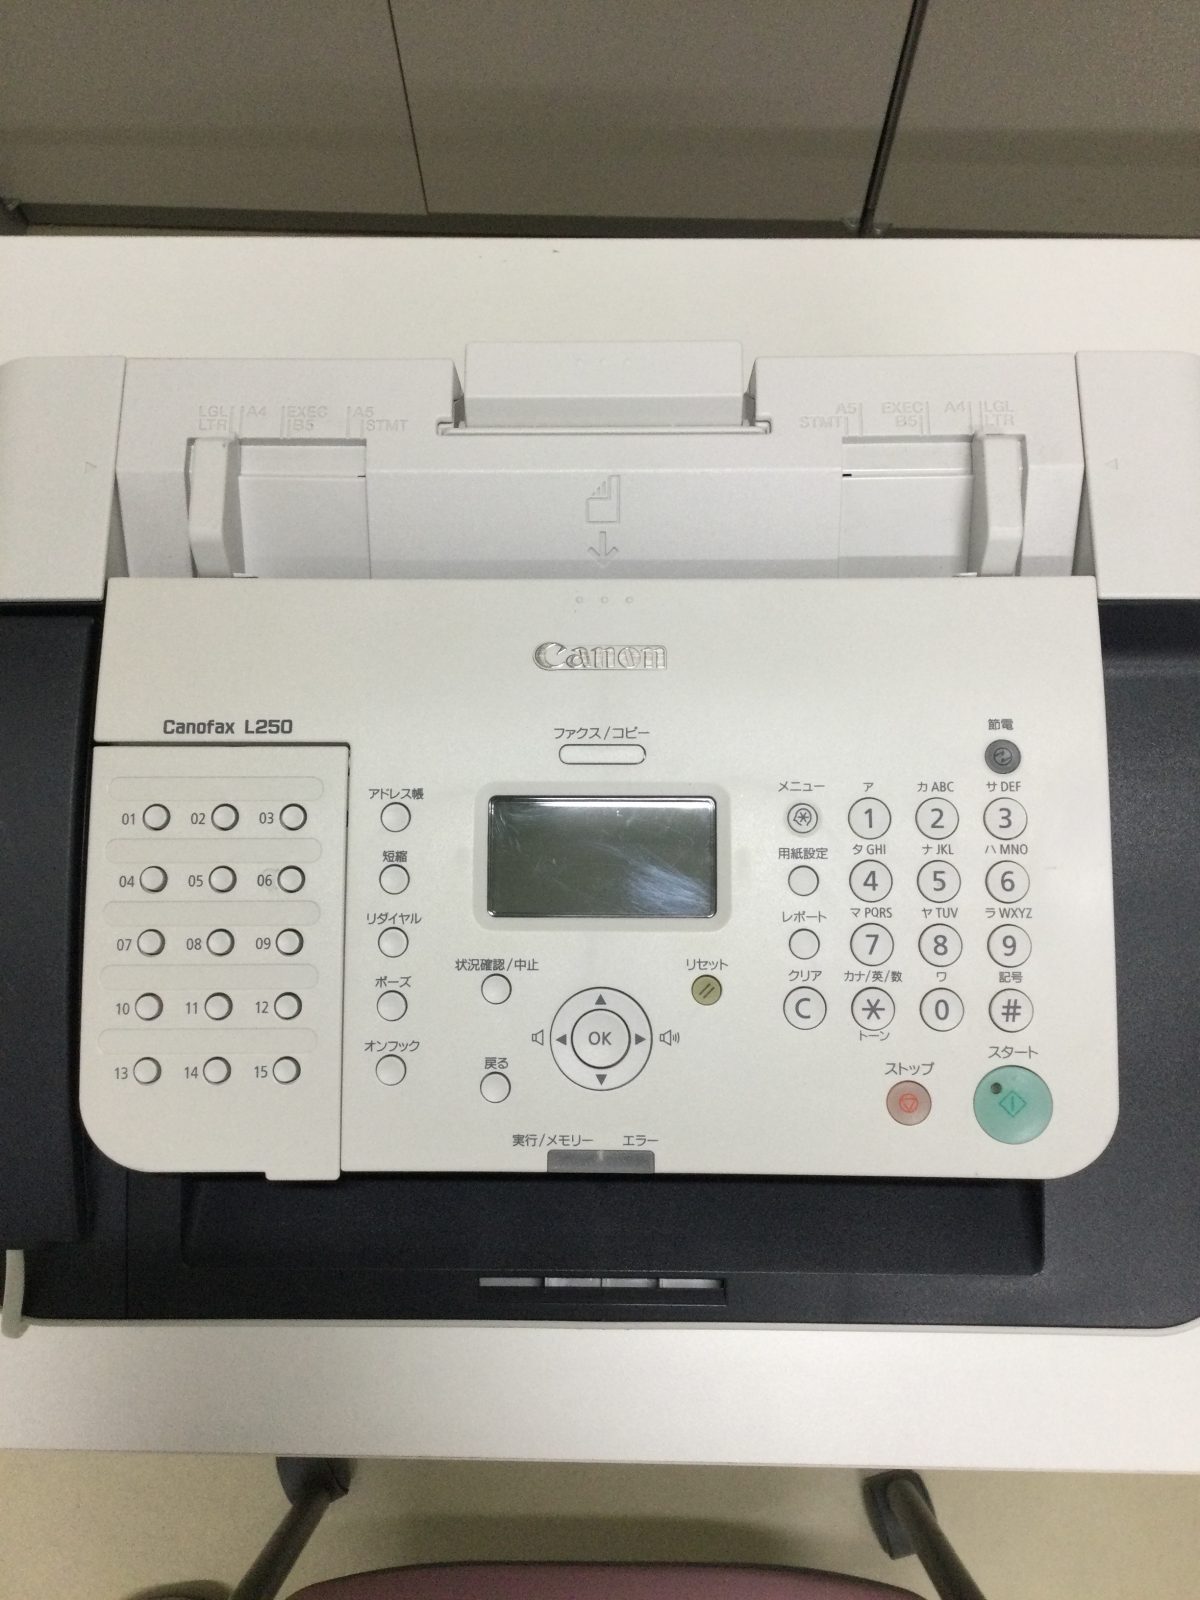 Canofax L250 - 中古コピー機や中古複合機、中古カラーコピー機の販売